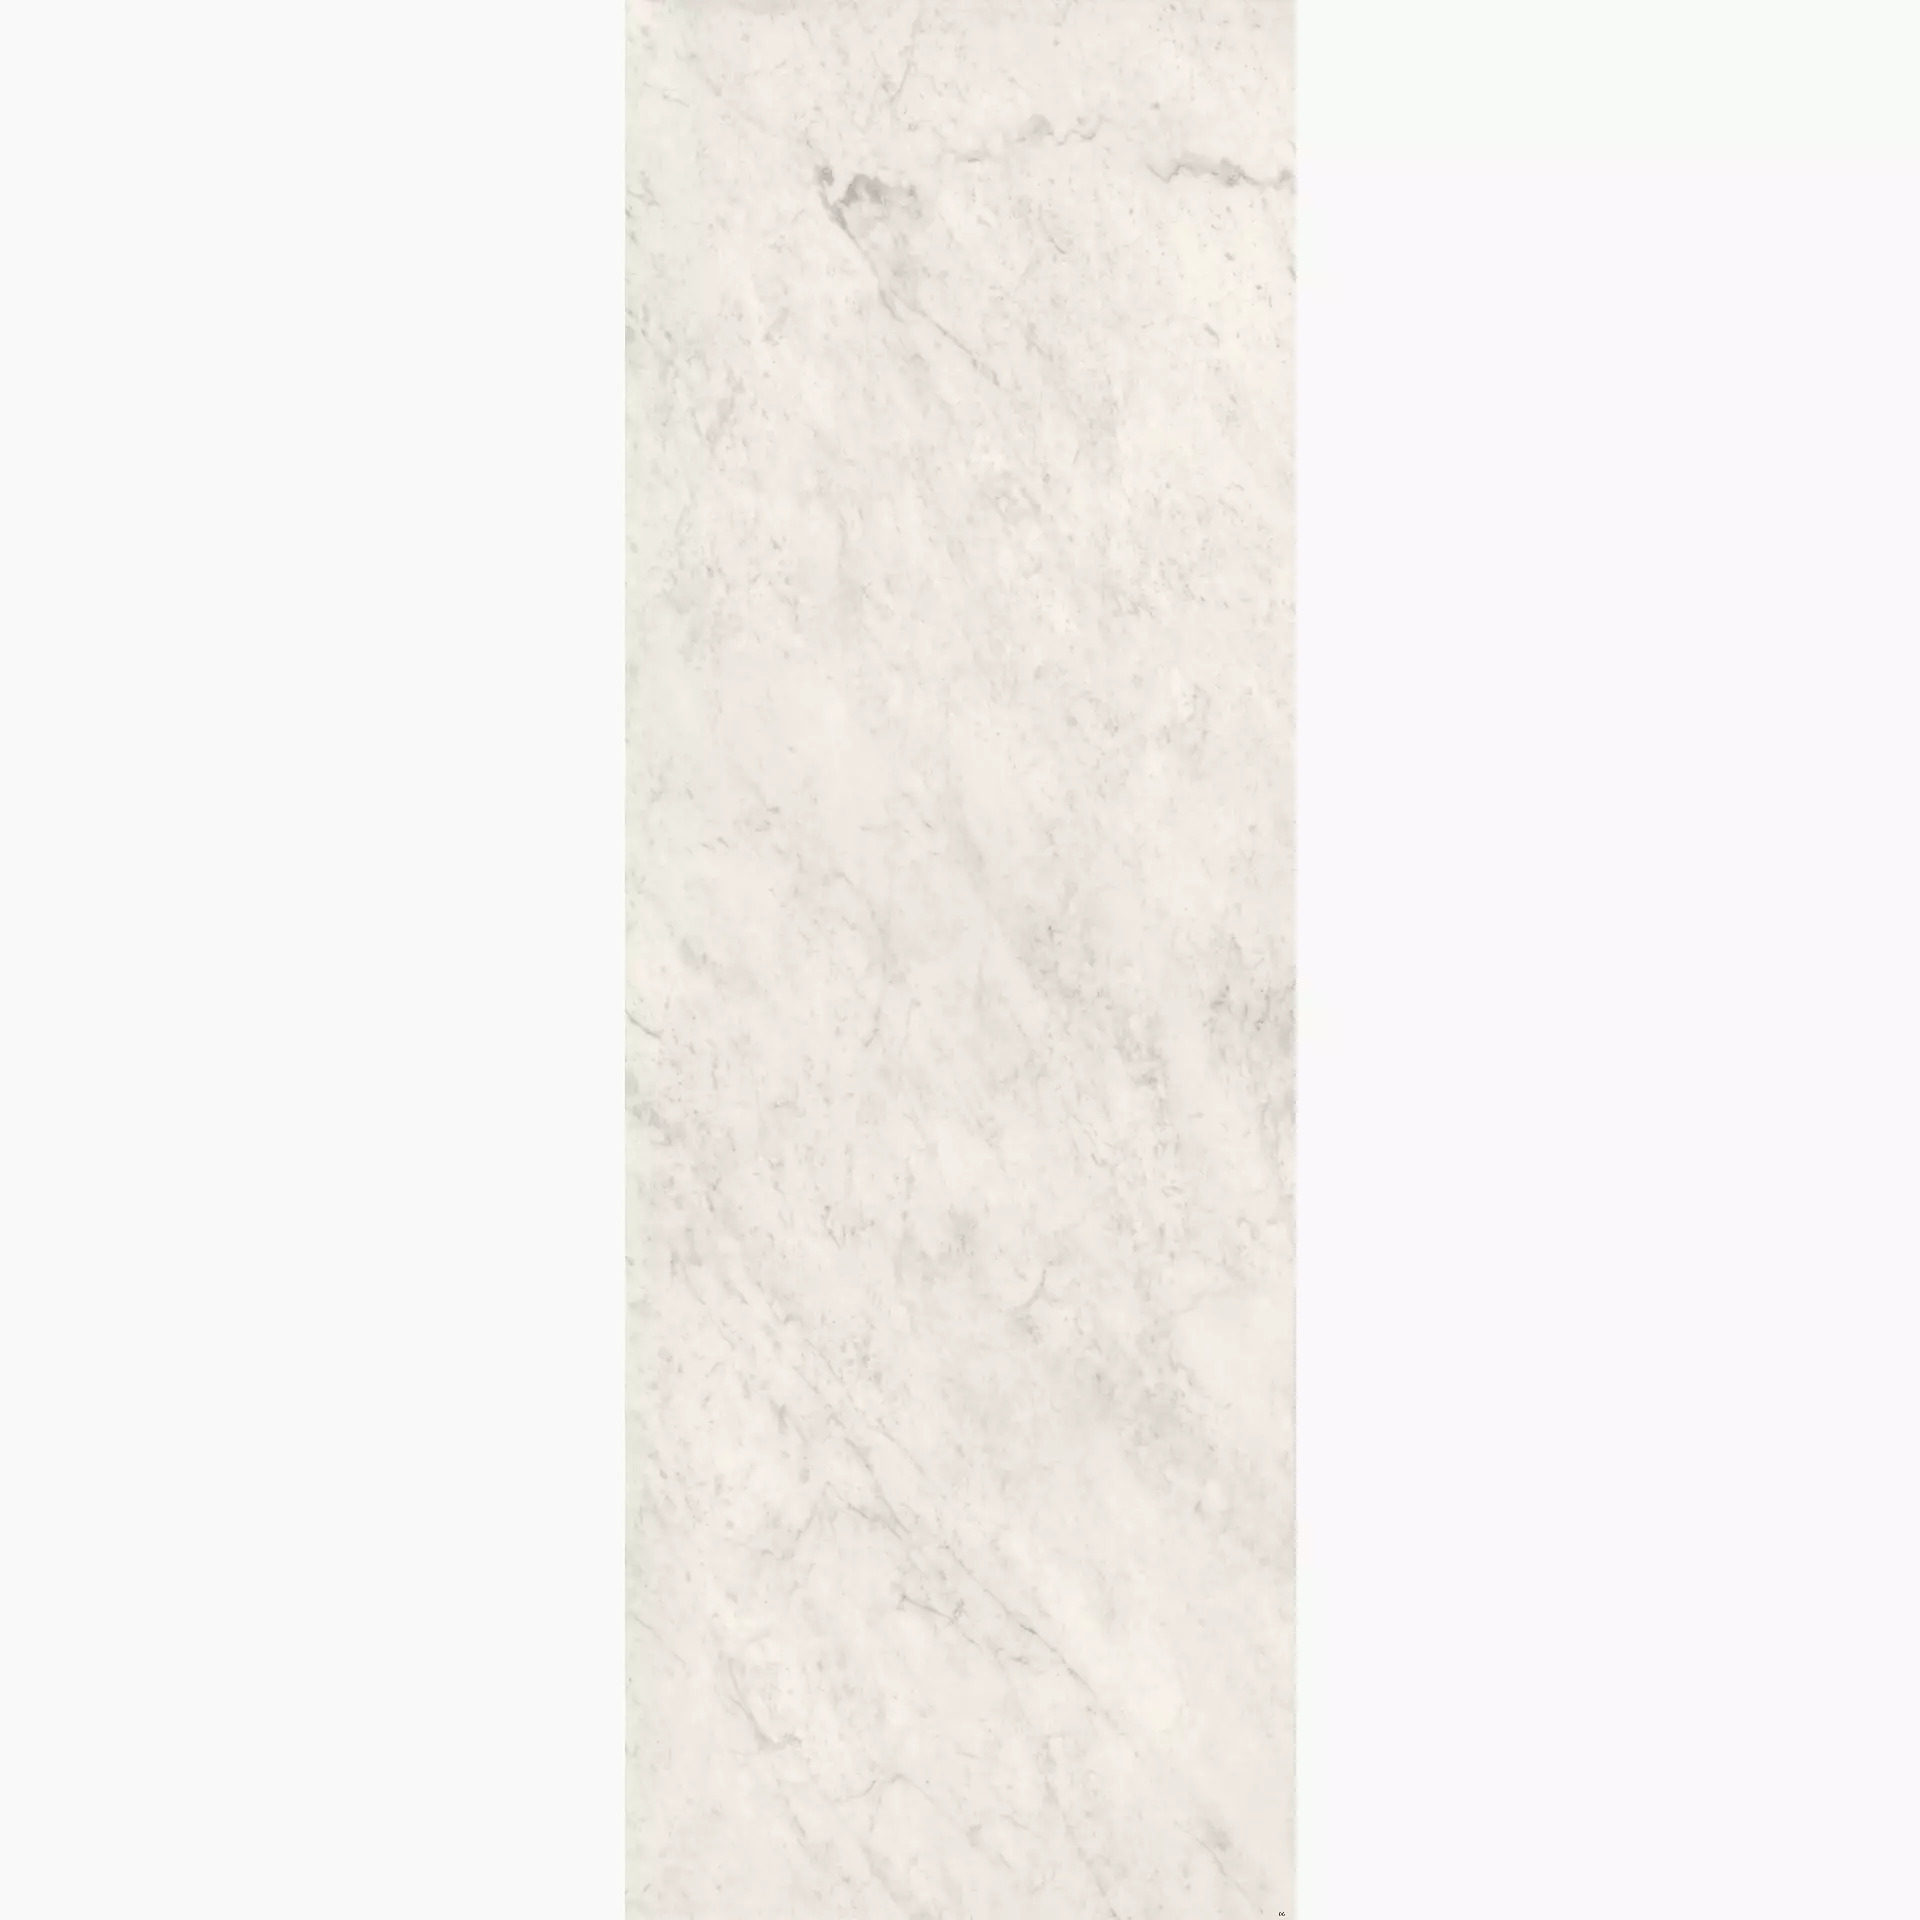 Cottodeste Kerlite Starlight Carrara White Smooth Protect EK7SL30 100x300cm rectified 3,5mm